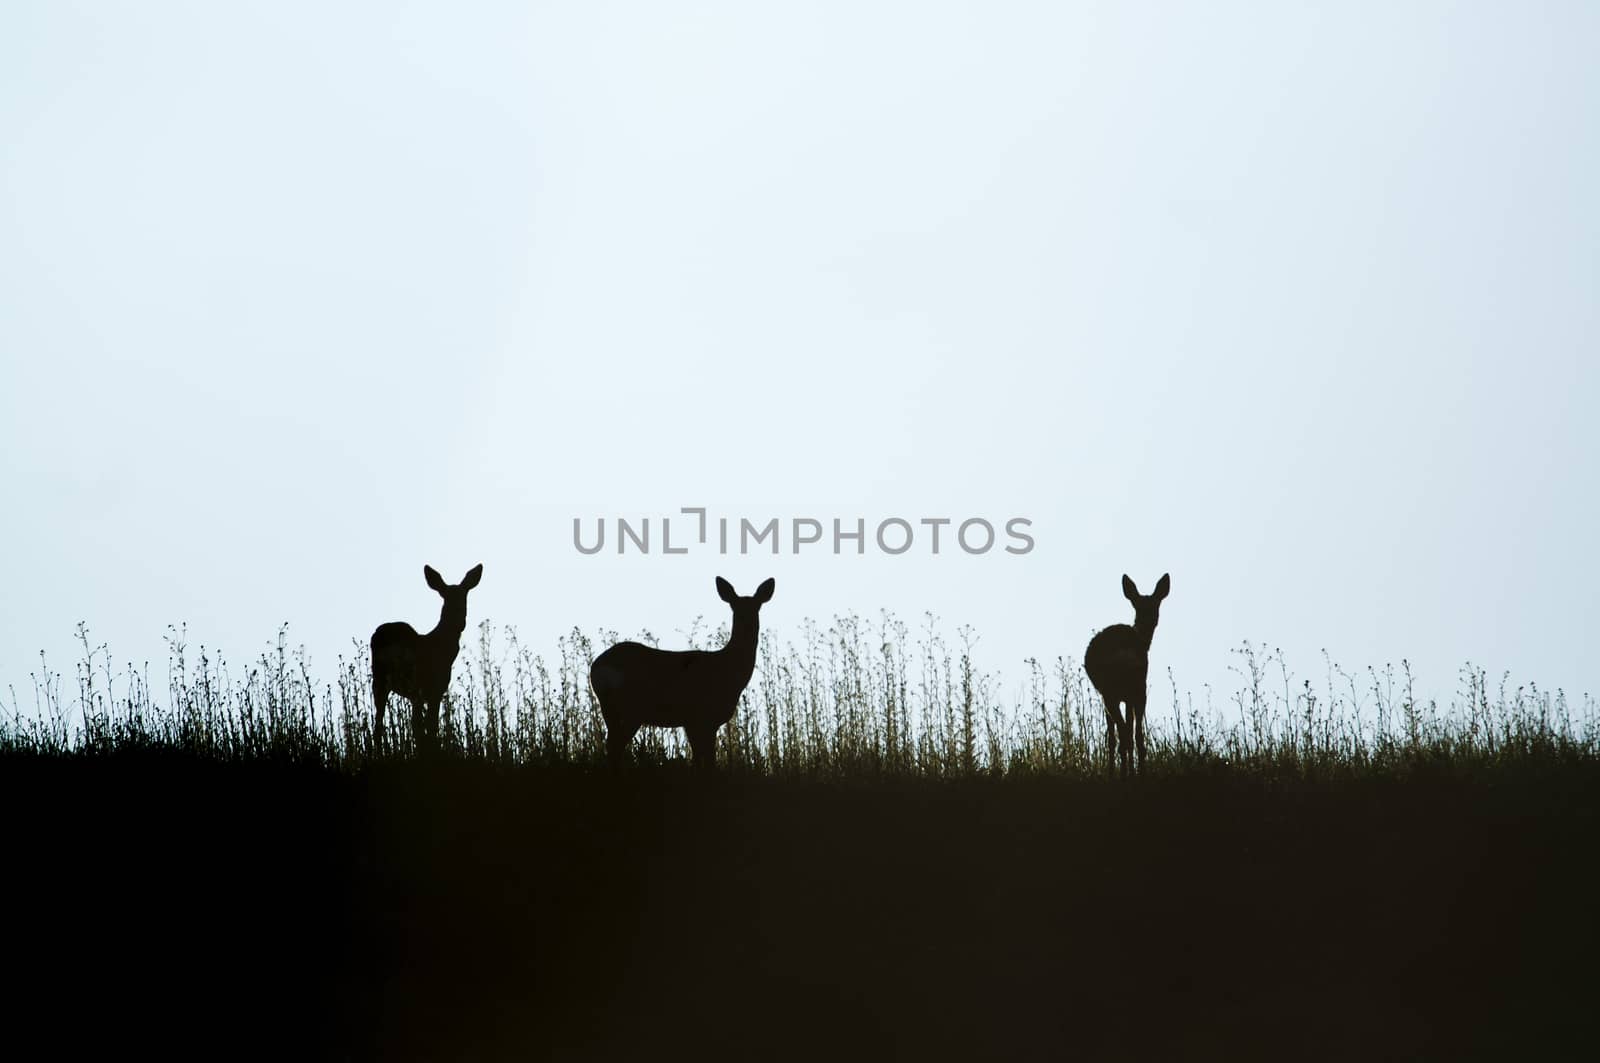 Roe Deer, Capreolus capreolus, Silhouette  by jalonsohu@gmail.com